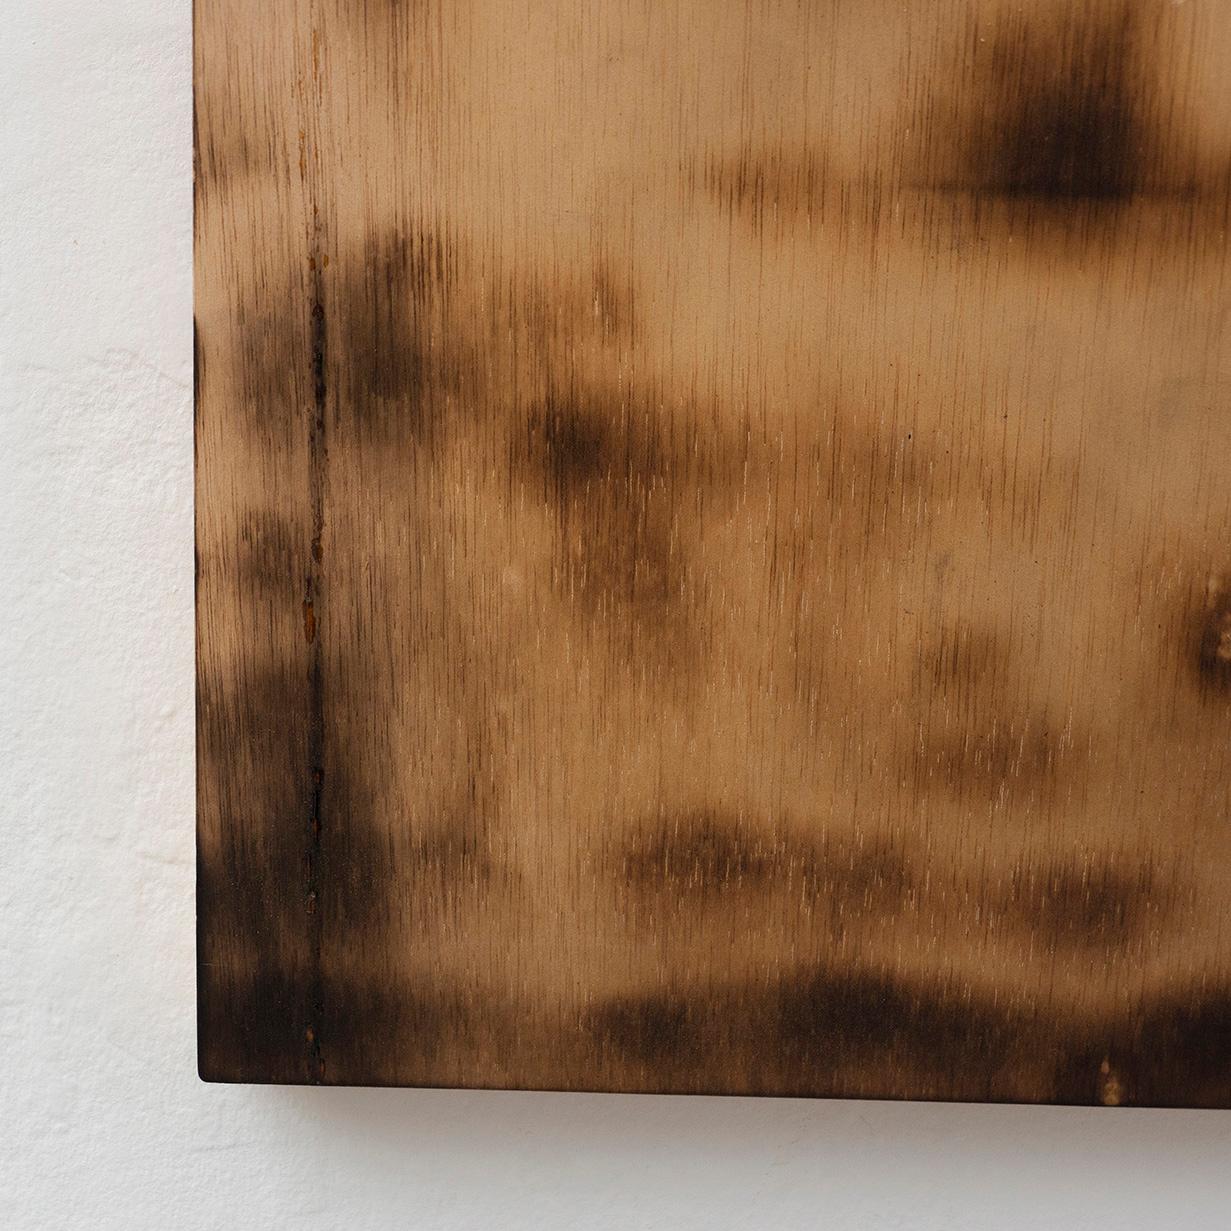 Ramon dels Horts Contemporary Artwork Burned Wood, circa 2018 For Sale 1